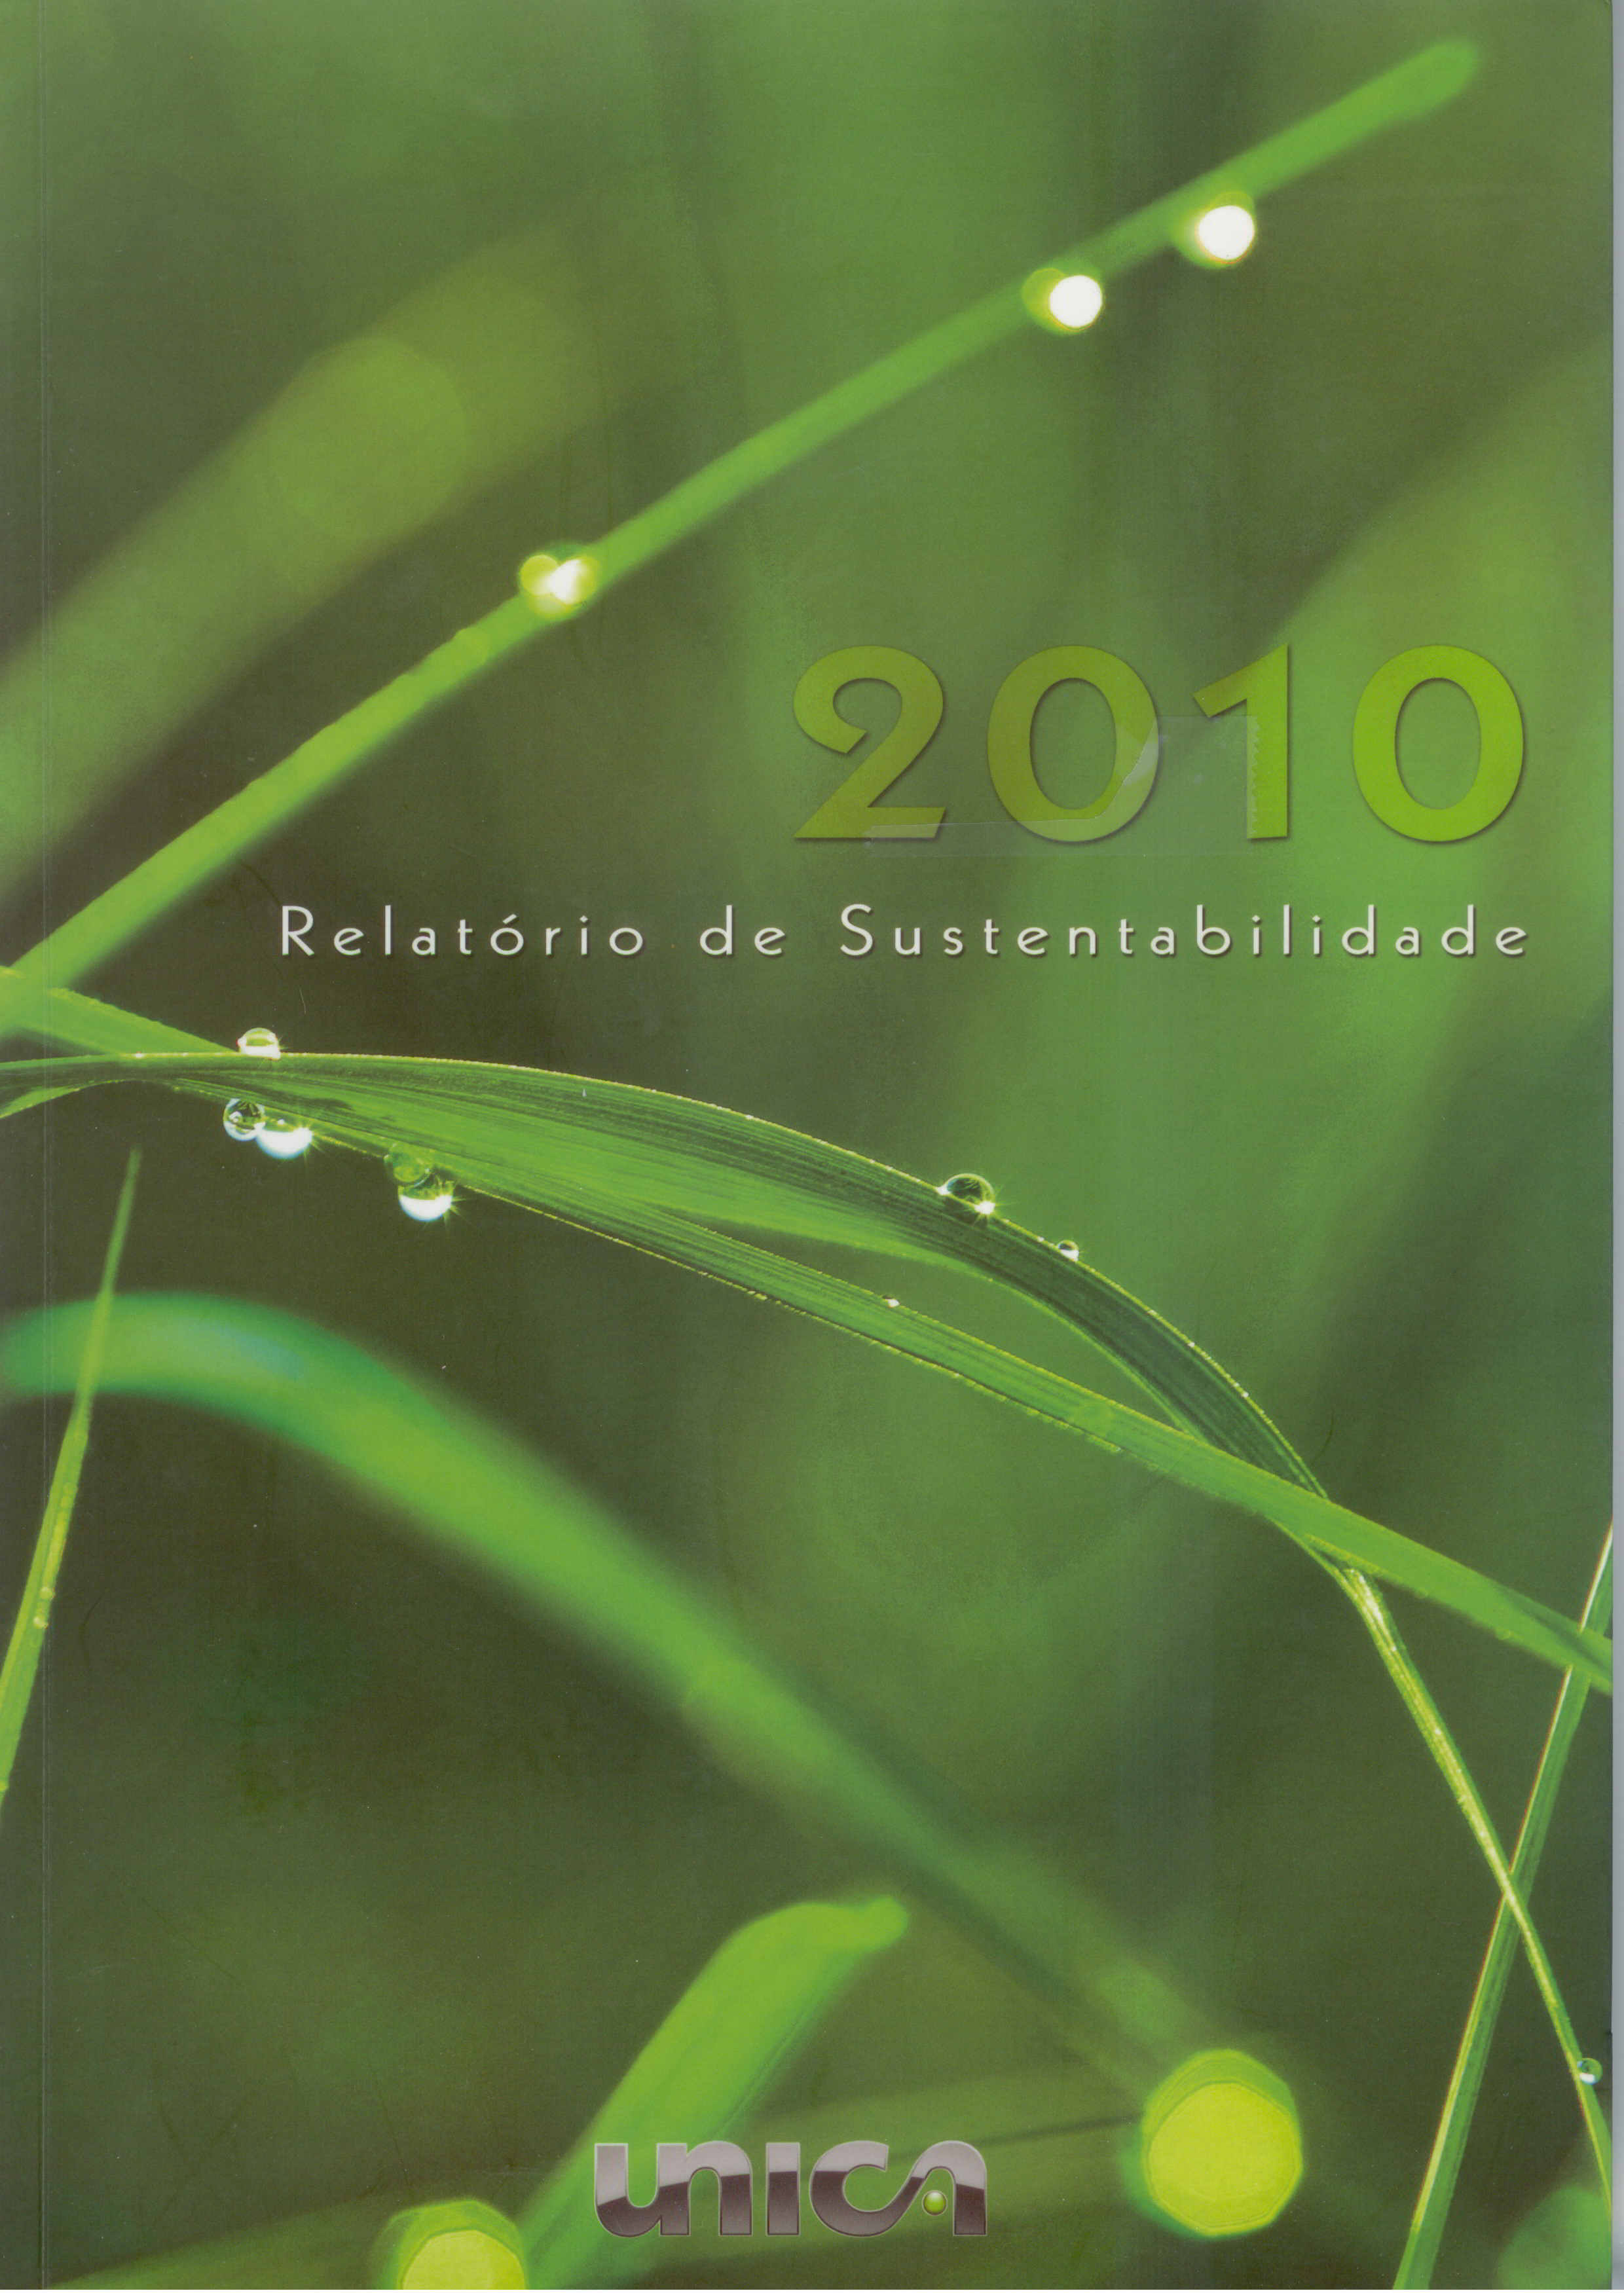 http://www.cenicana.org/investigacion/seica/imagenes_libros/2012/caratula_relatorio_sustentabilidad.jpg